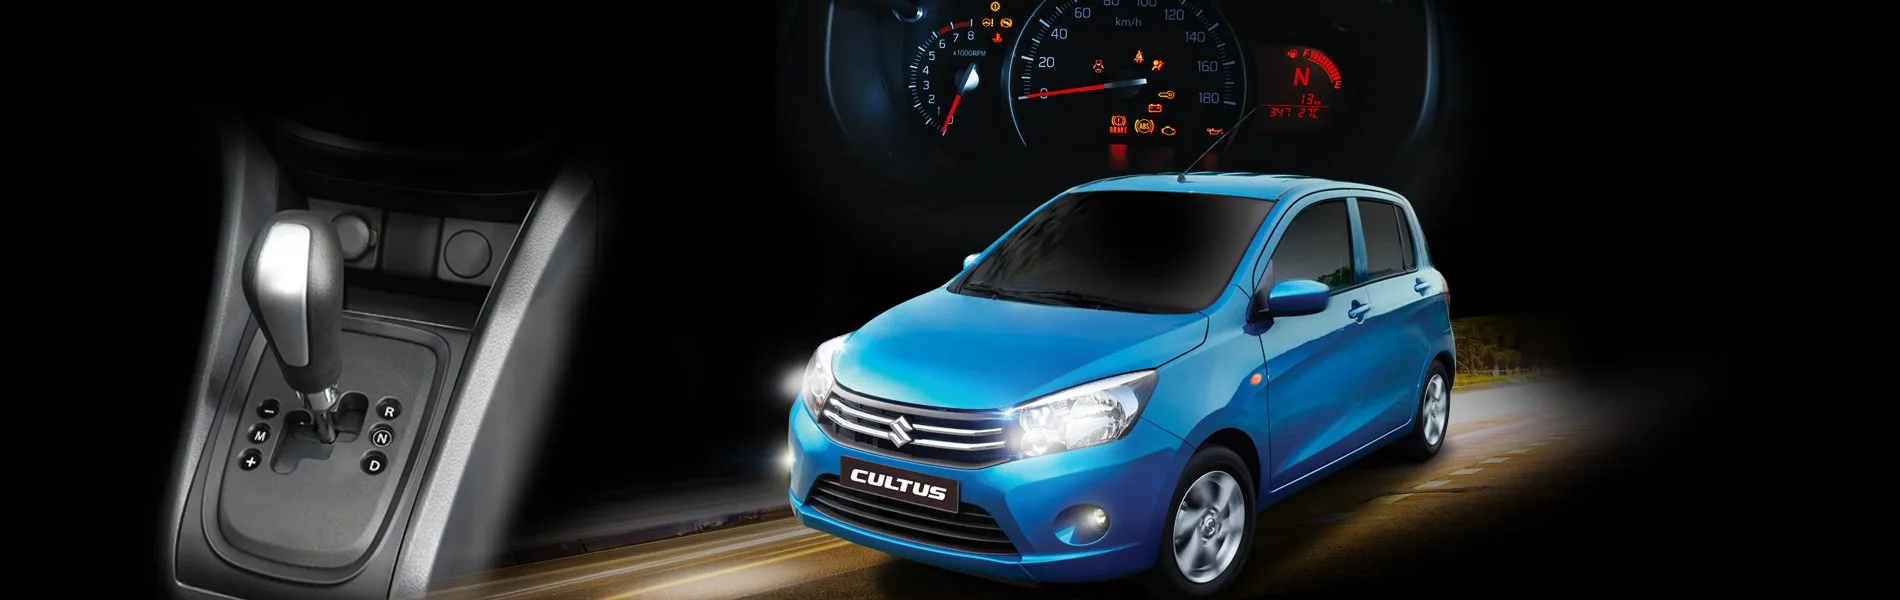 Suzuki Cultus latest price in PAkistan